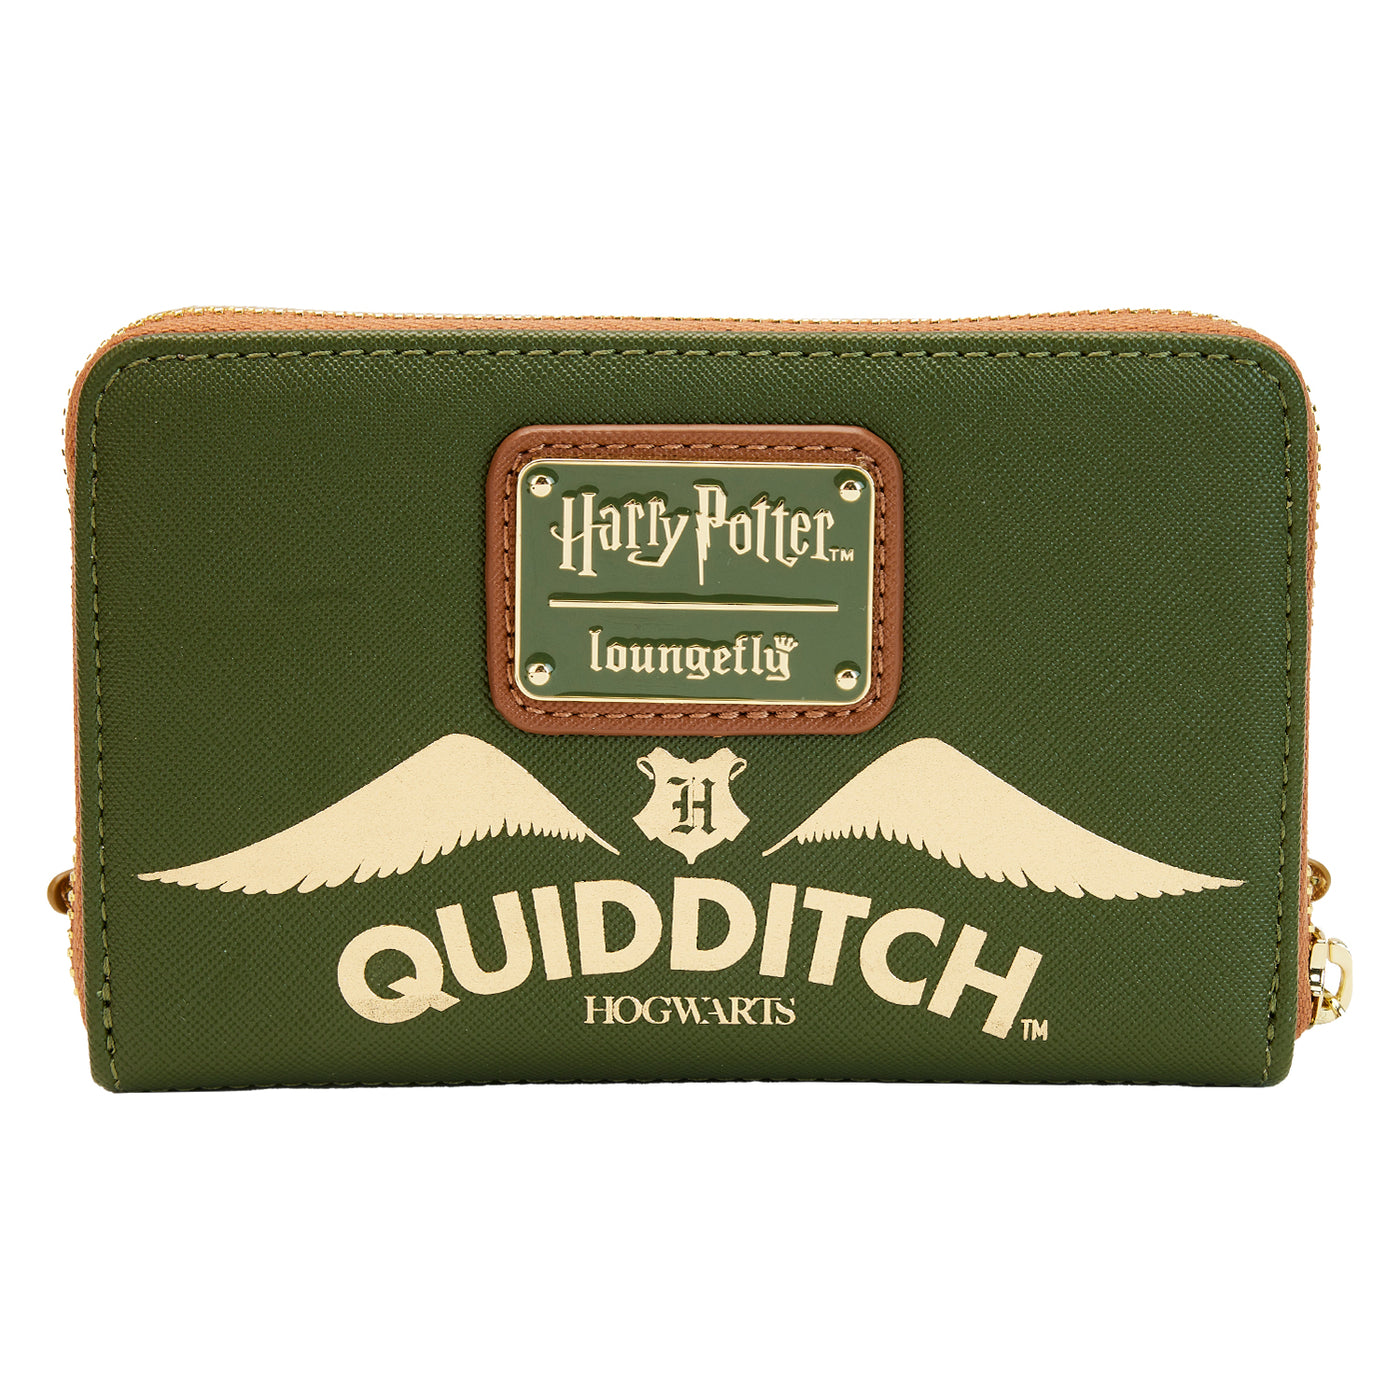 Harry Potter Hogwarts Quidditch Golden Snitch Wallet